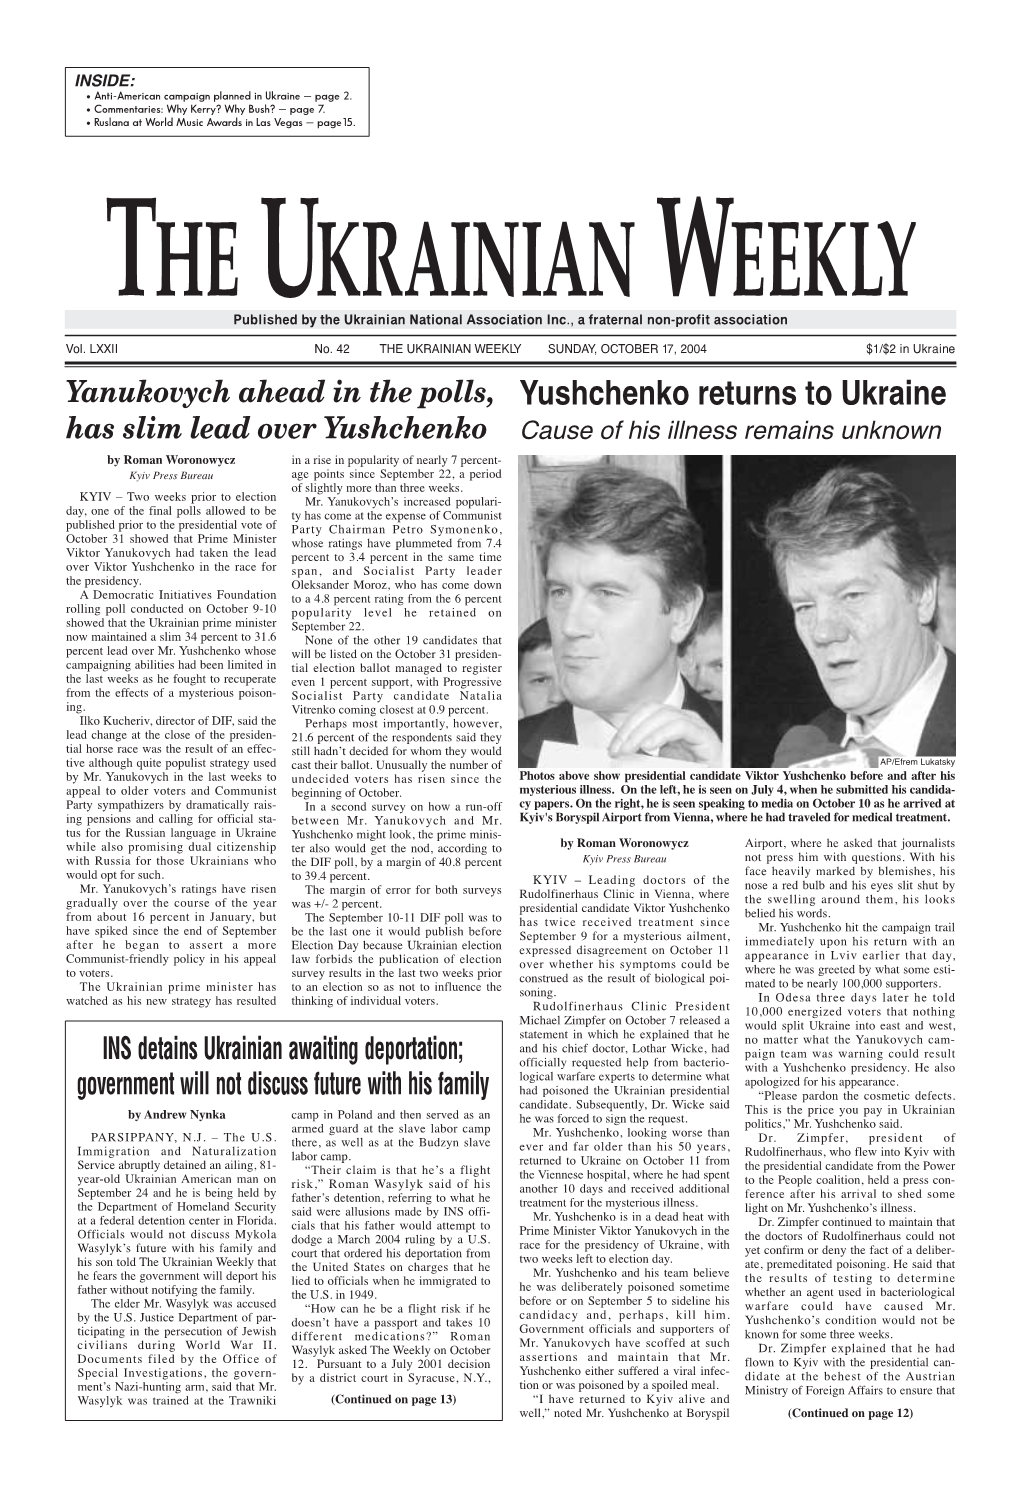 Yushchenko Returns to Ukraine